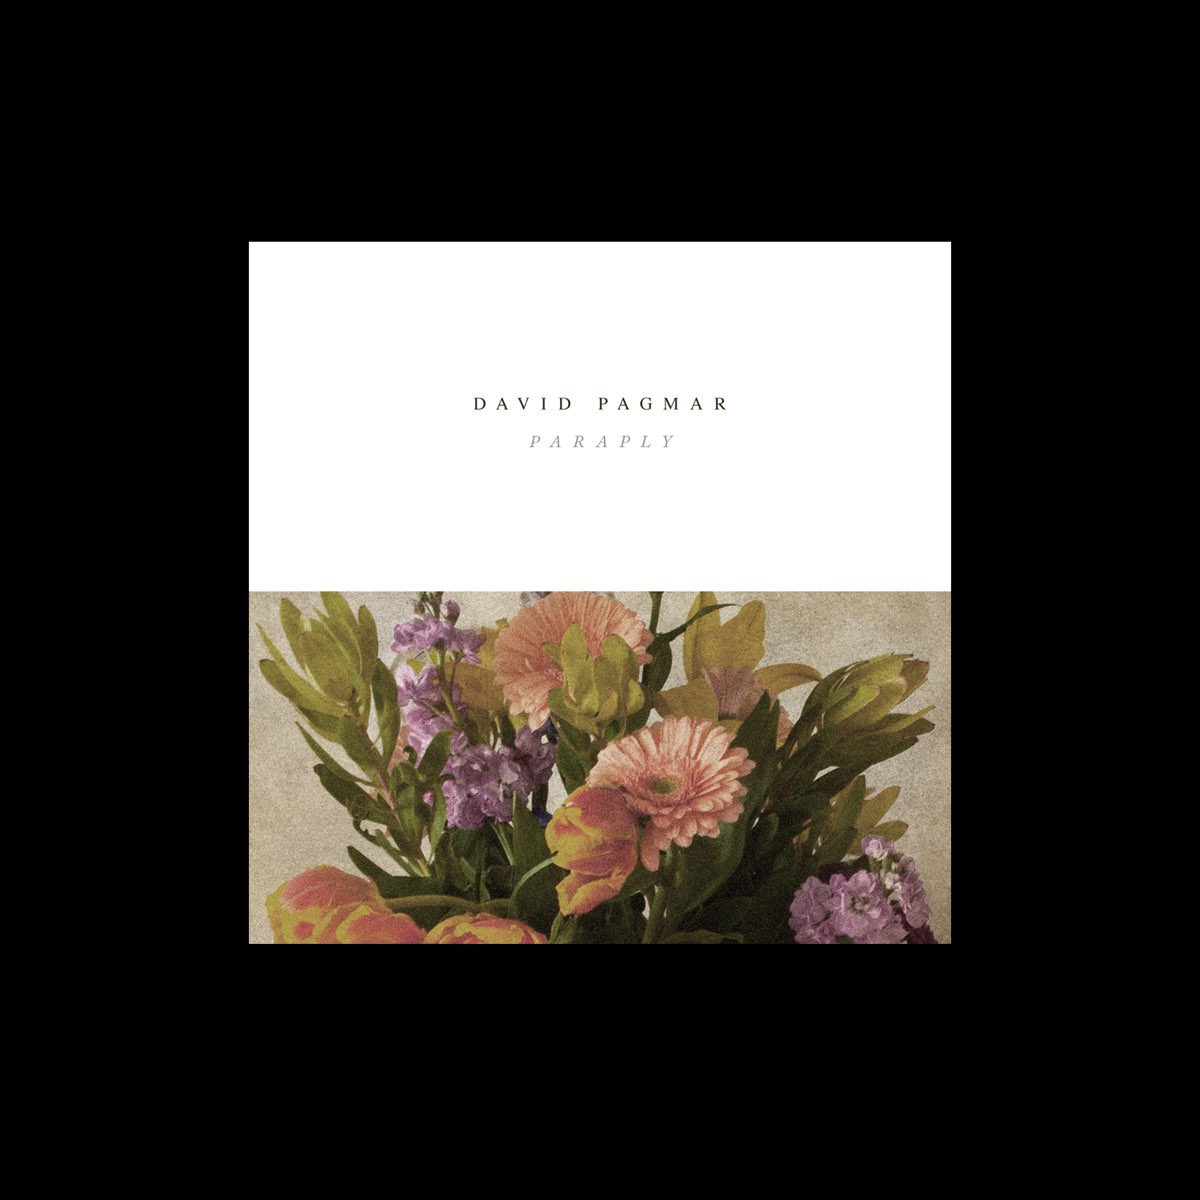 Paraply - Single - Album by David Pagmar - Apple Music